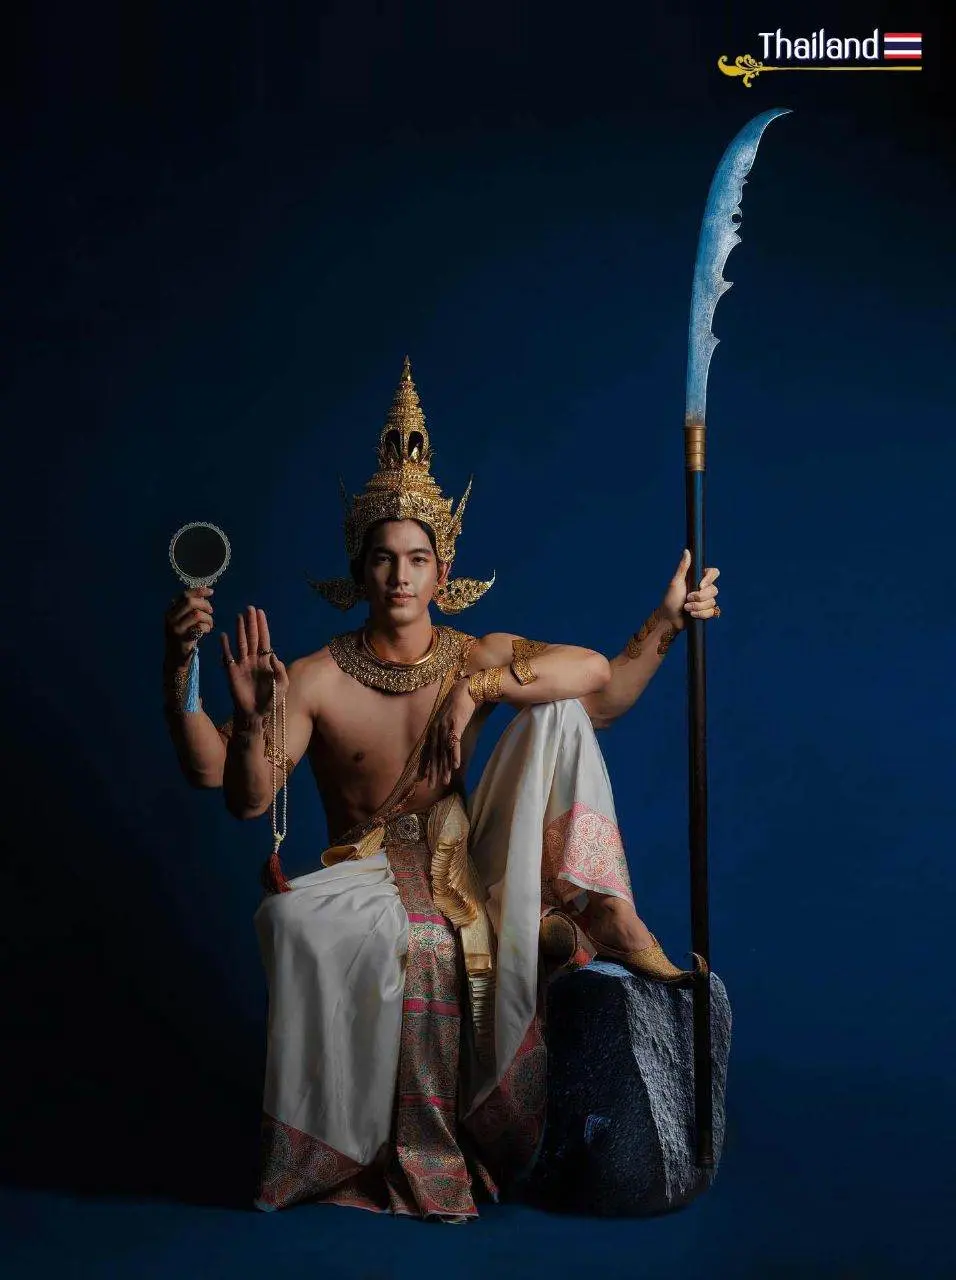 🇹🇭 THAILAND | "Khun Sangkhan" The Lord of Lanna Songkran festival 2023